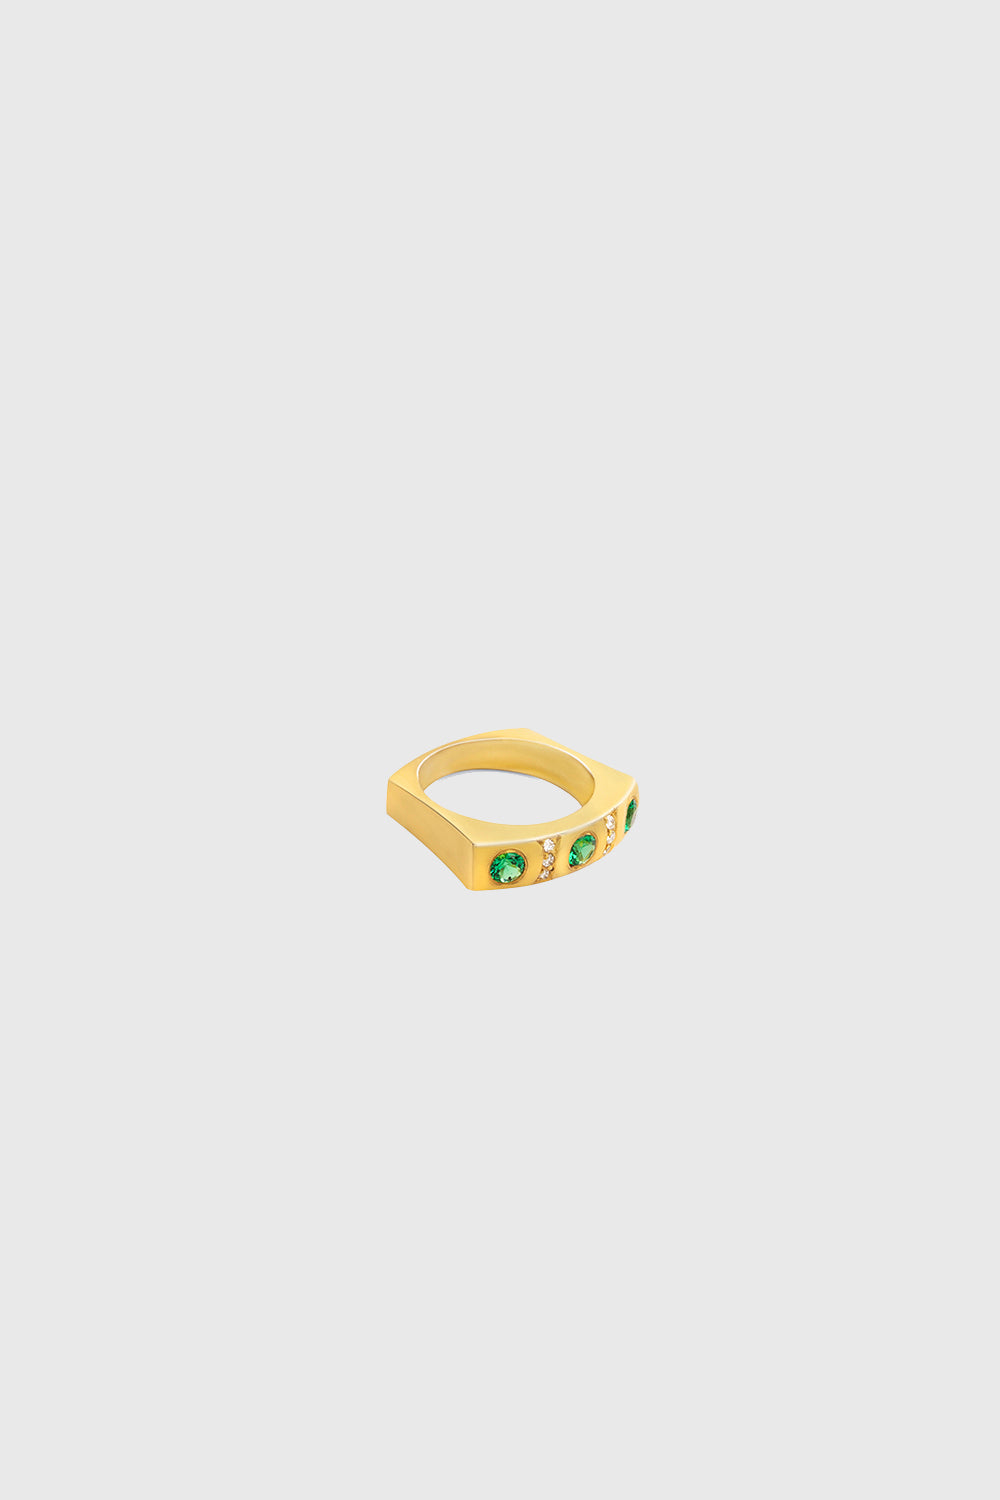 Emerald Diamong Gold Ring